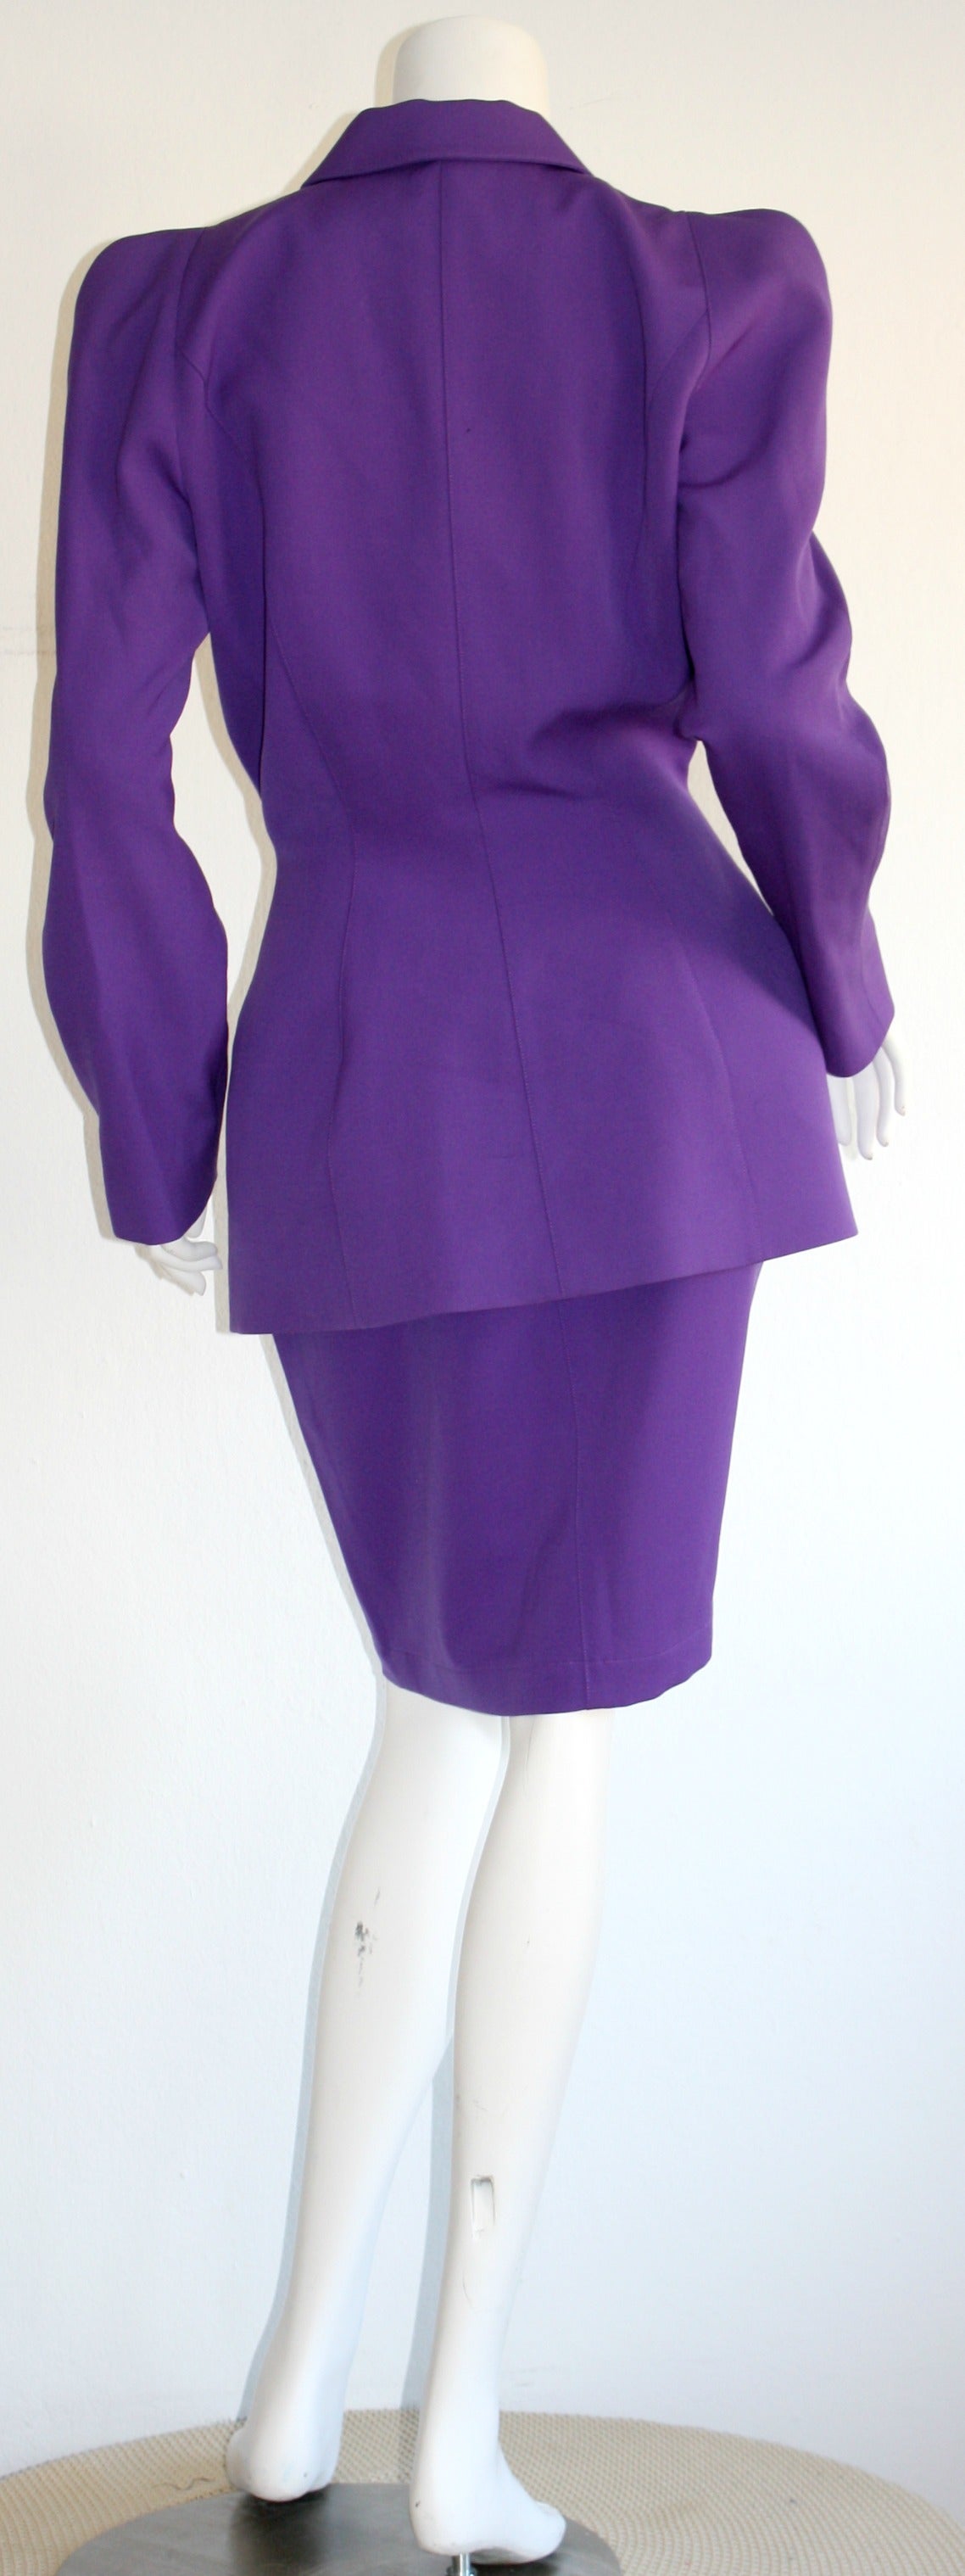 vintage purple suit